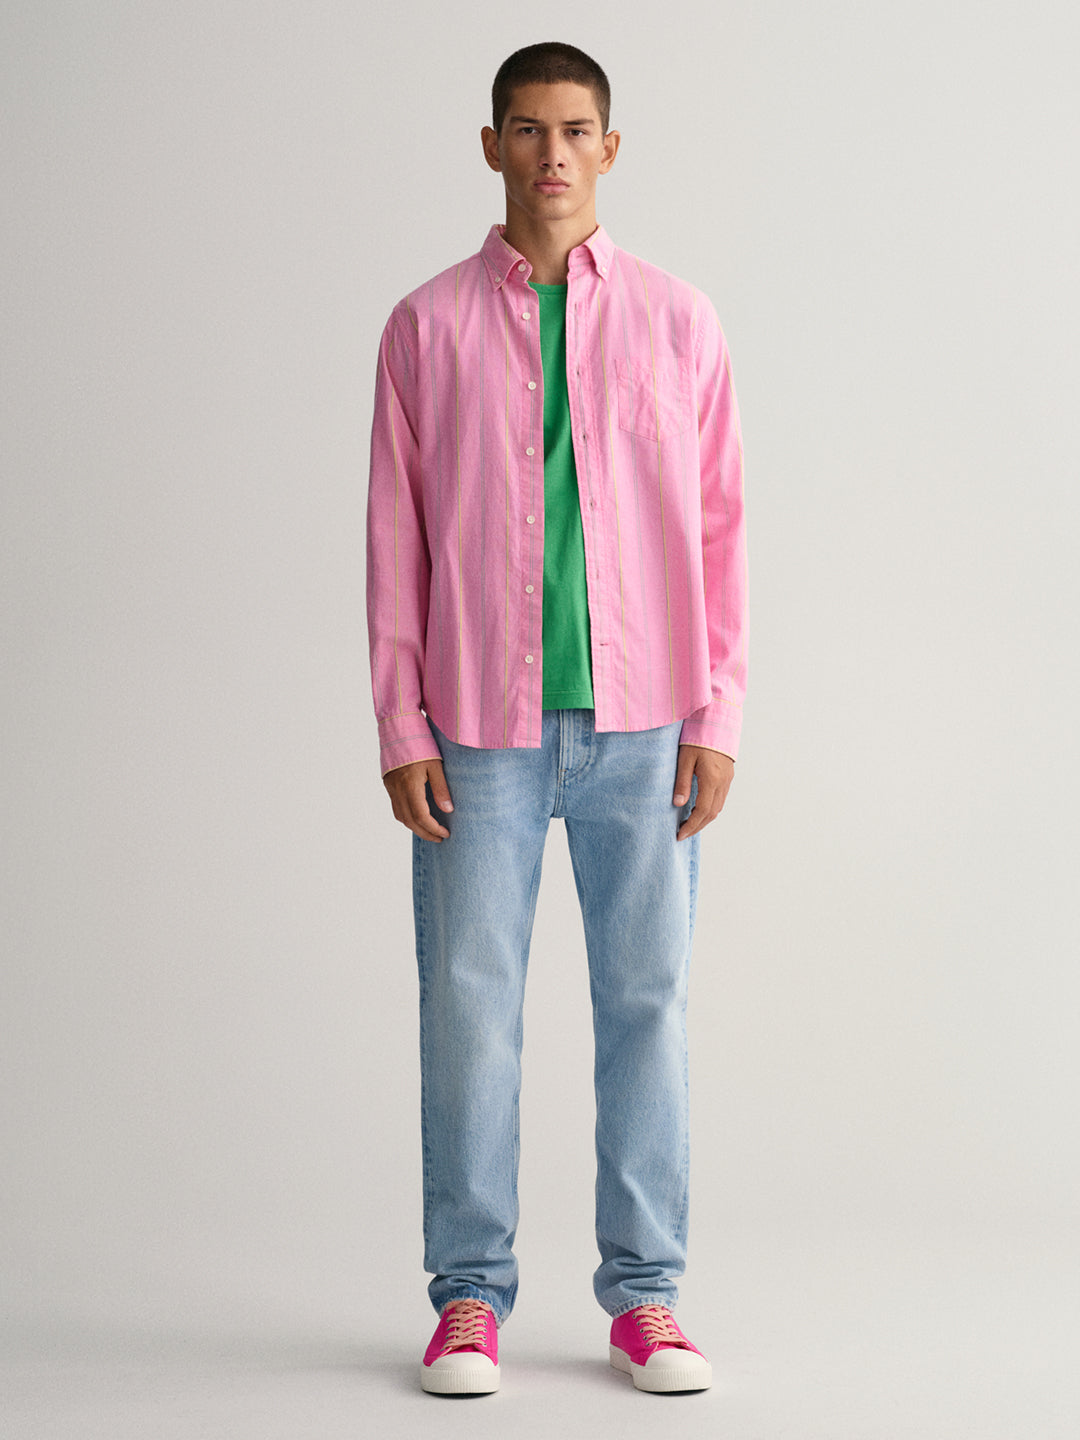 Gant Pink Oxford Striped Regular Fit Shirt